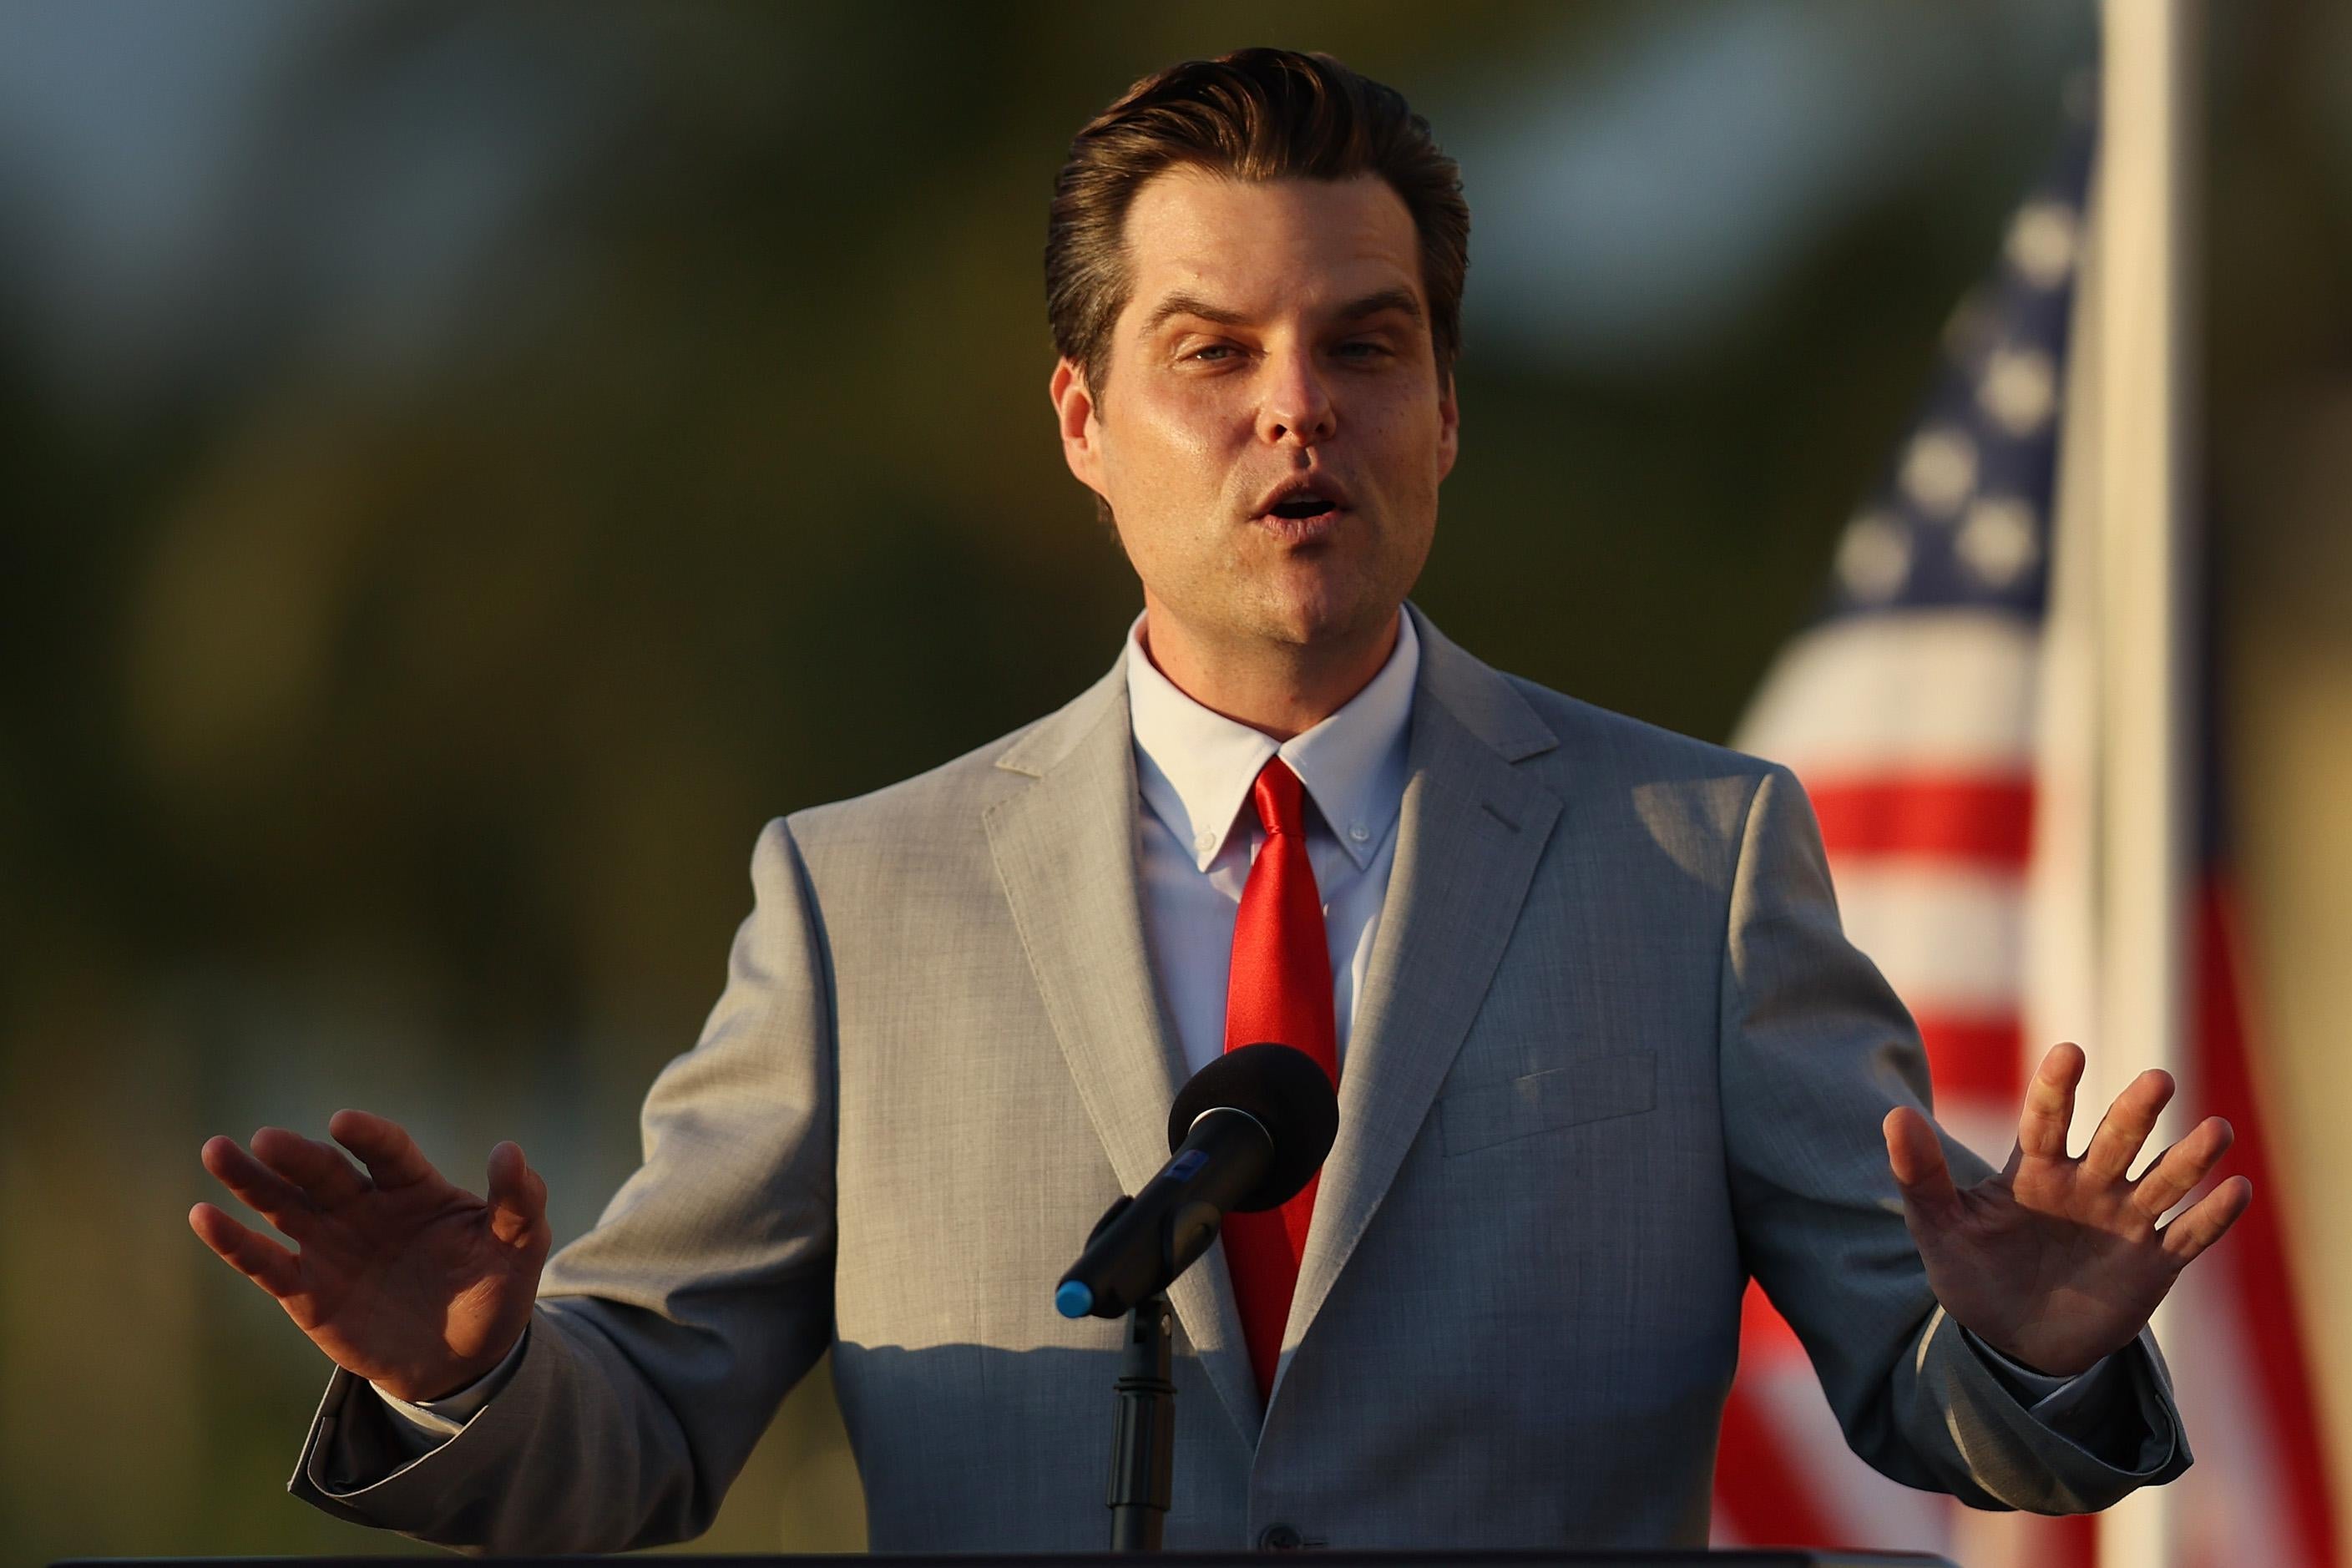 Rep. Matt Gaetz (R-Fl) speaks during the "Save America Summit" at the Trump National Doral golf resort on April 9, 2021 in Doral, Florida.